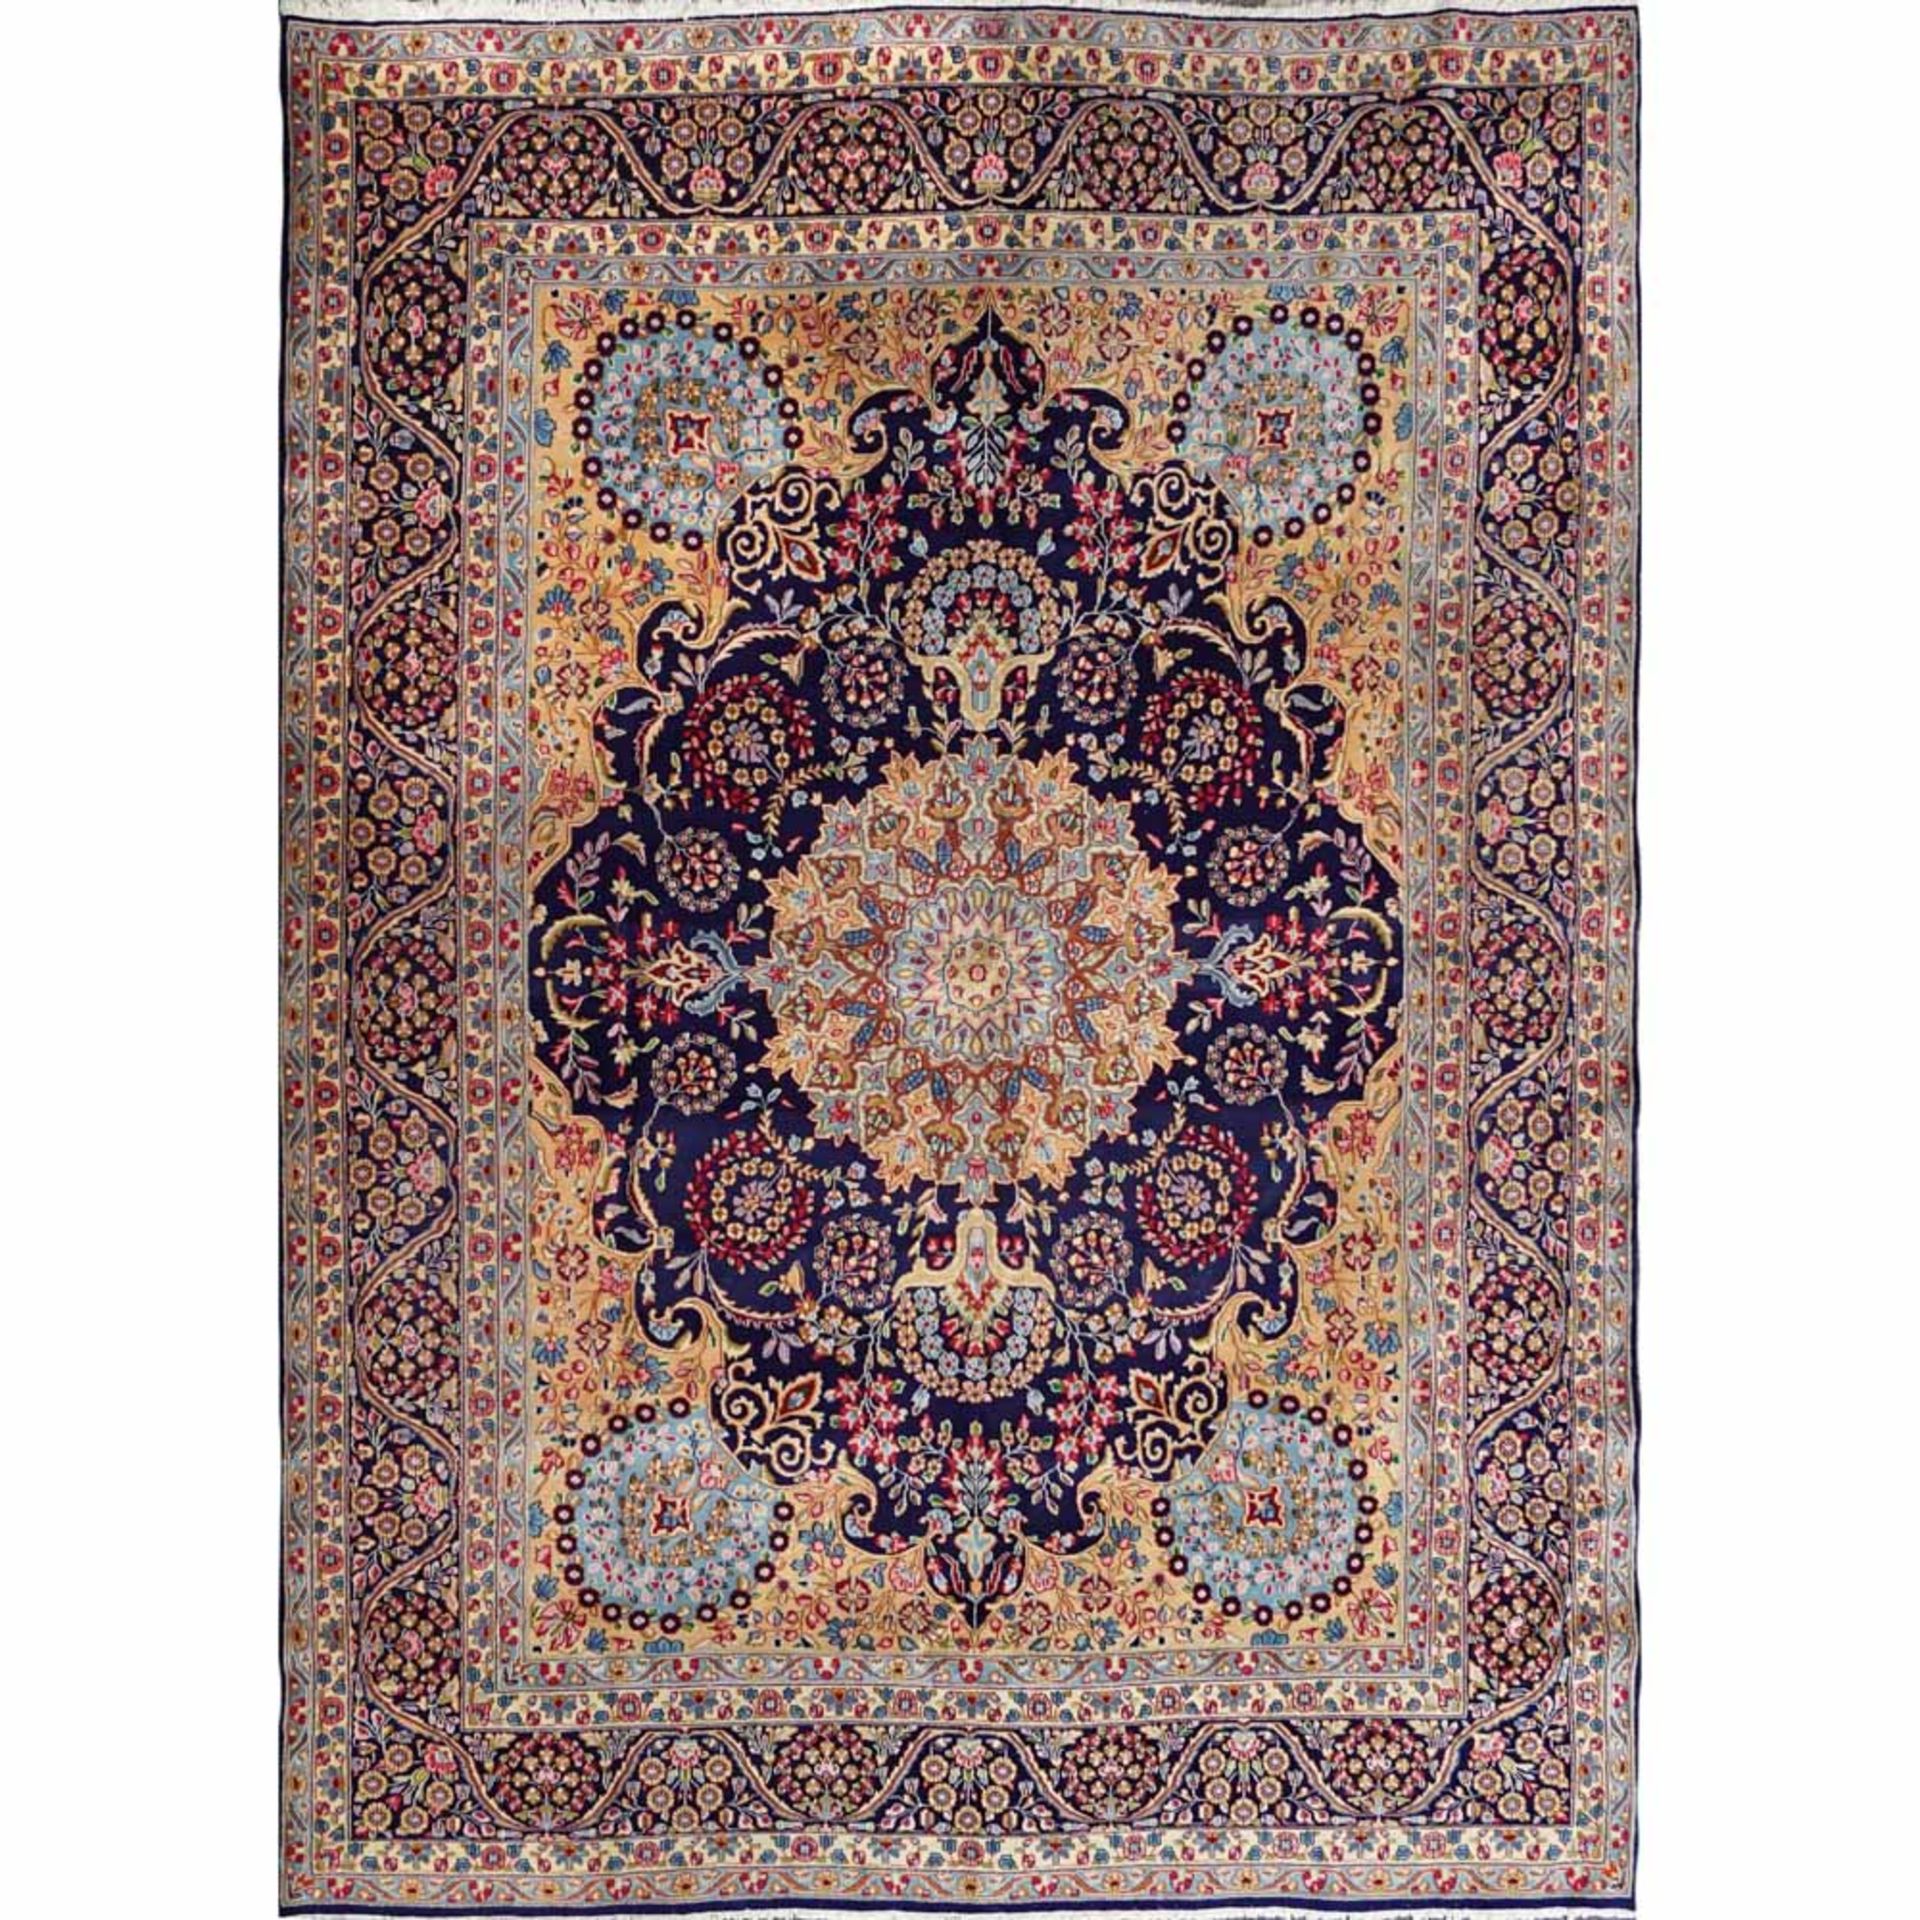 Kerman carpet Persia, 20th century 387x298 cm.